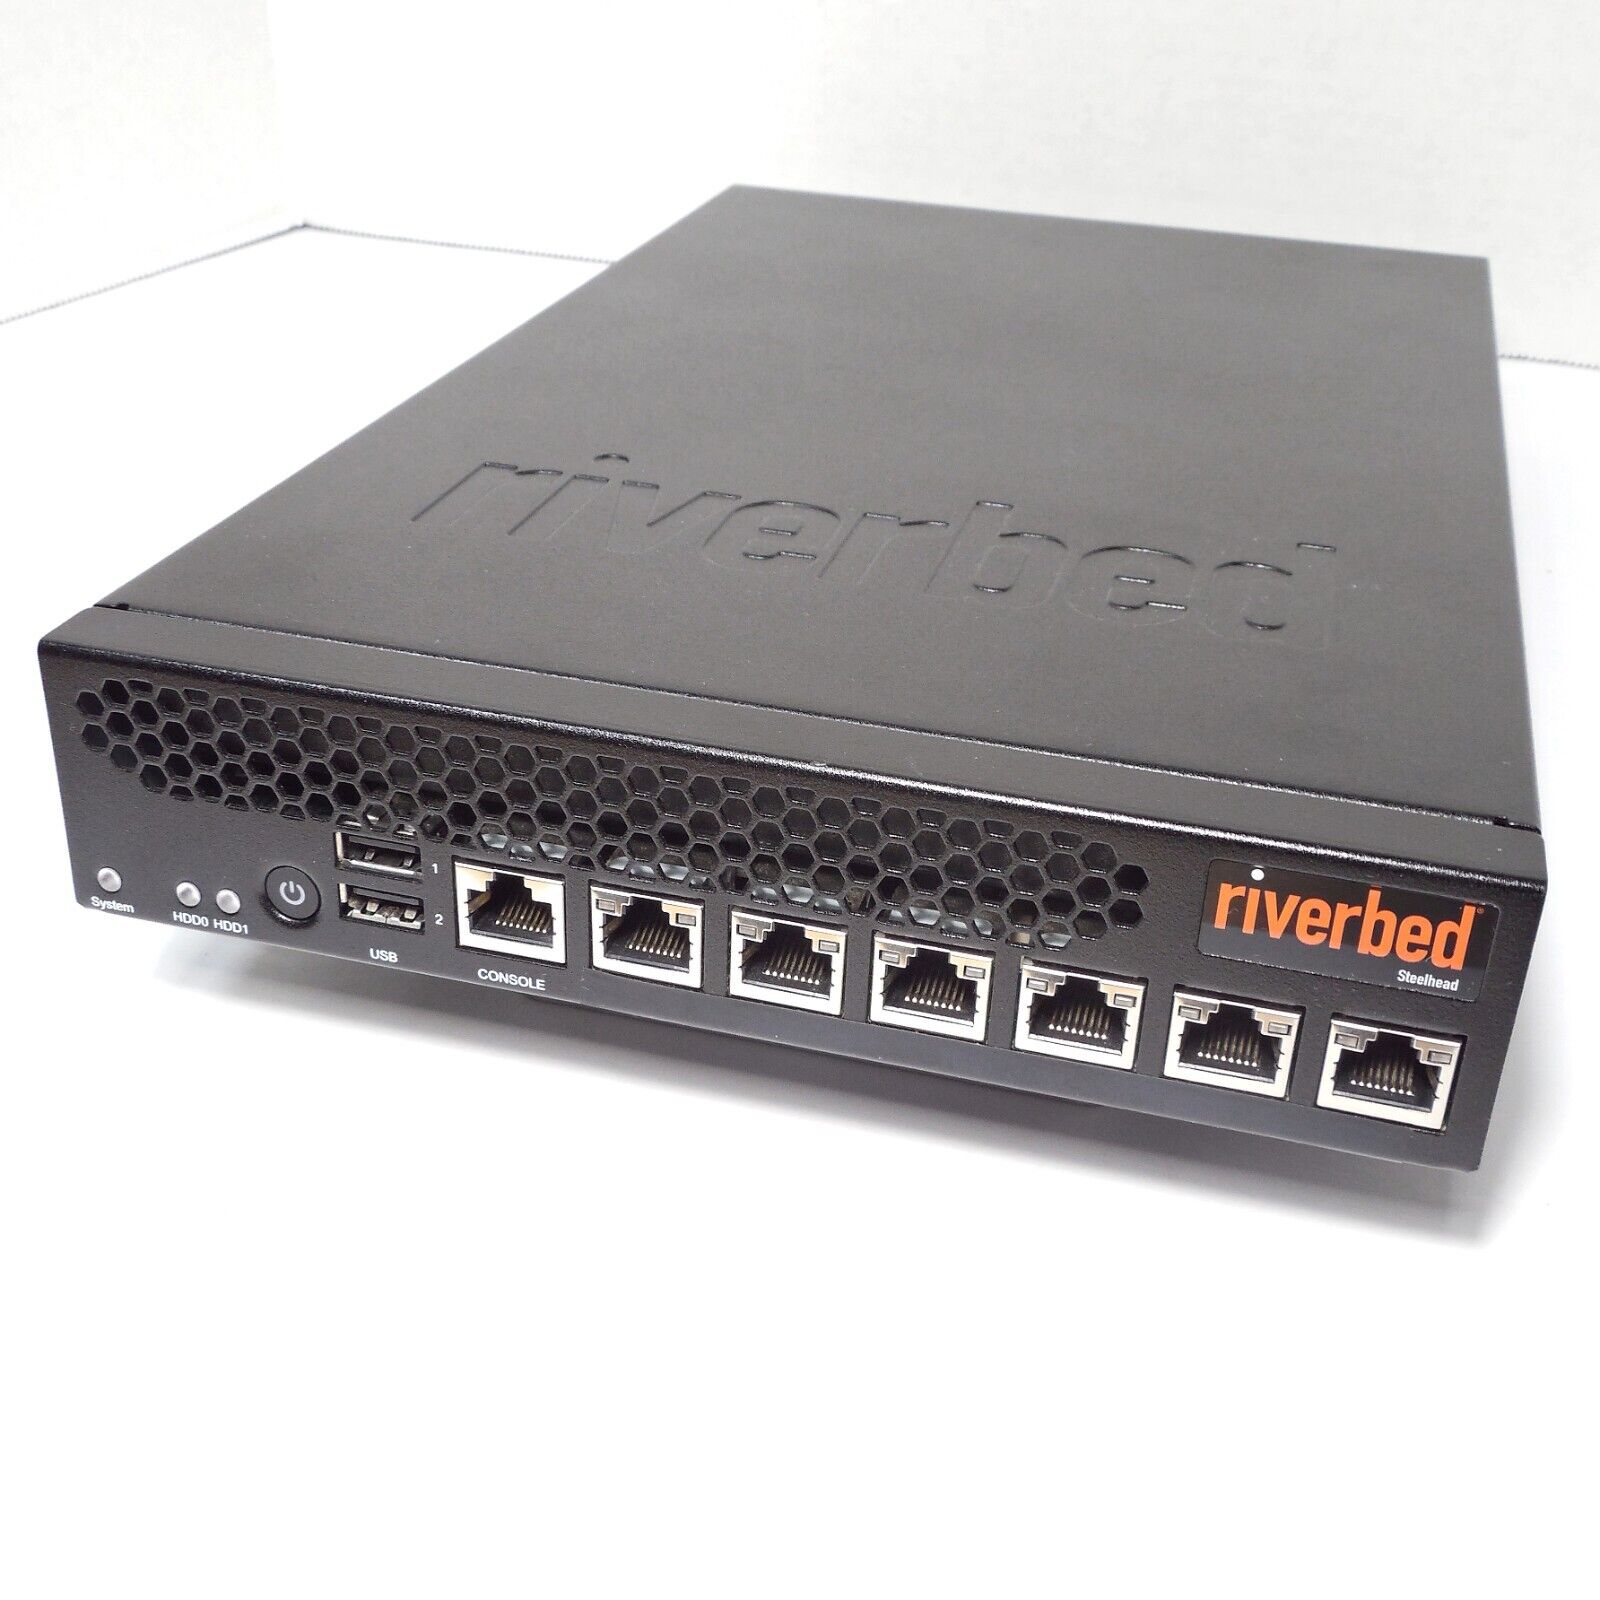 OPNsense Network Firewall Router Security Appliance